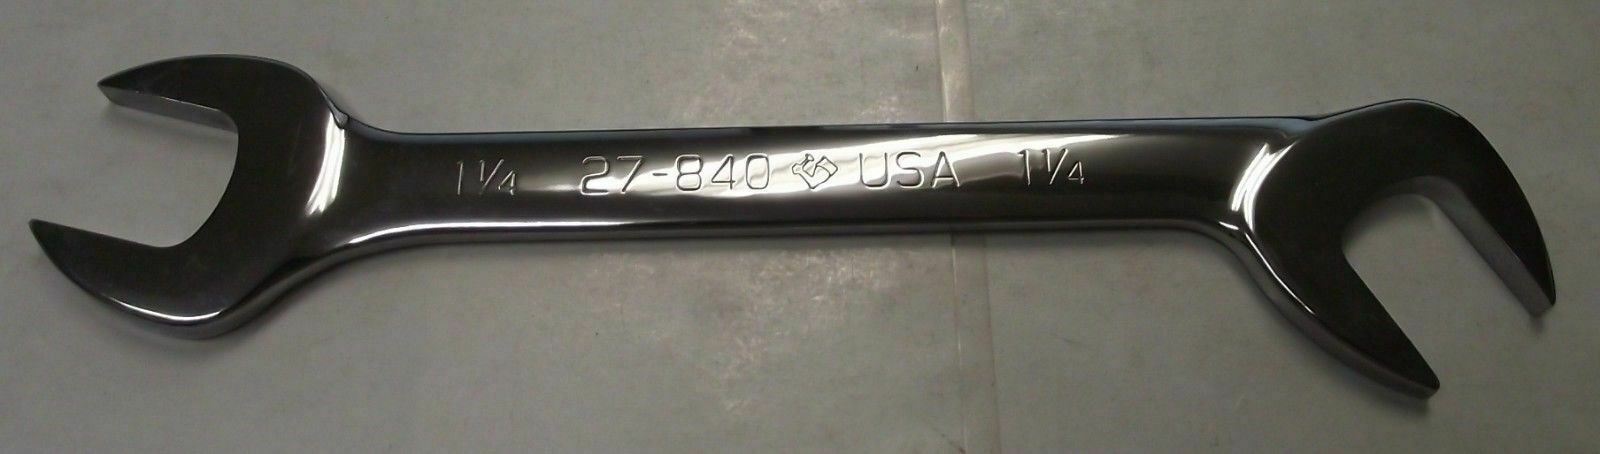 Armstrong 27-840 1-1/4" Open End Full Polish 15° and 60° Angle Wrench USA